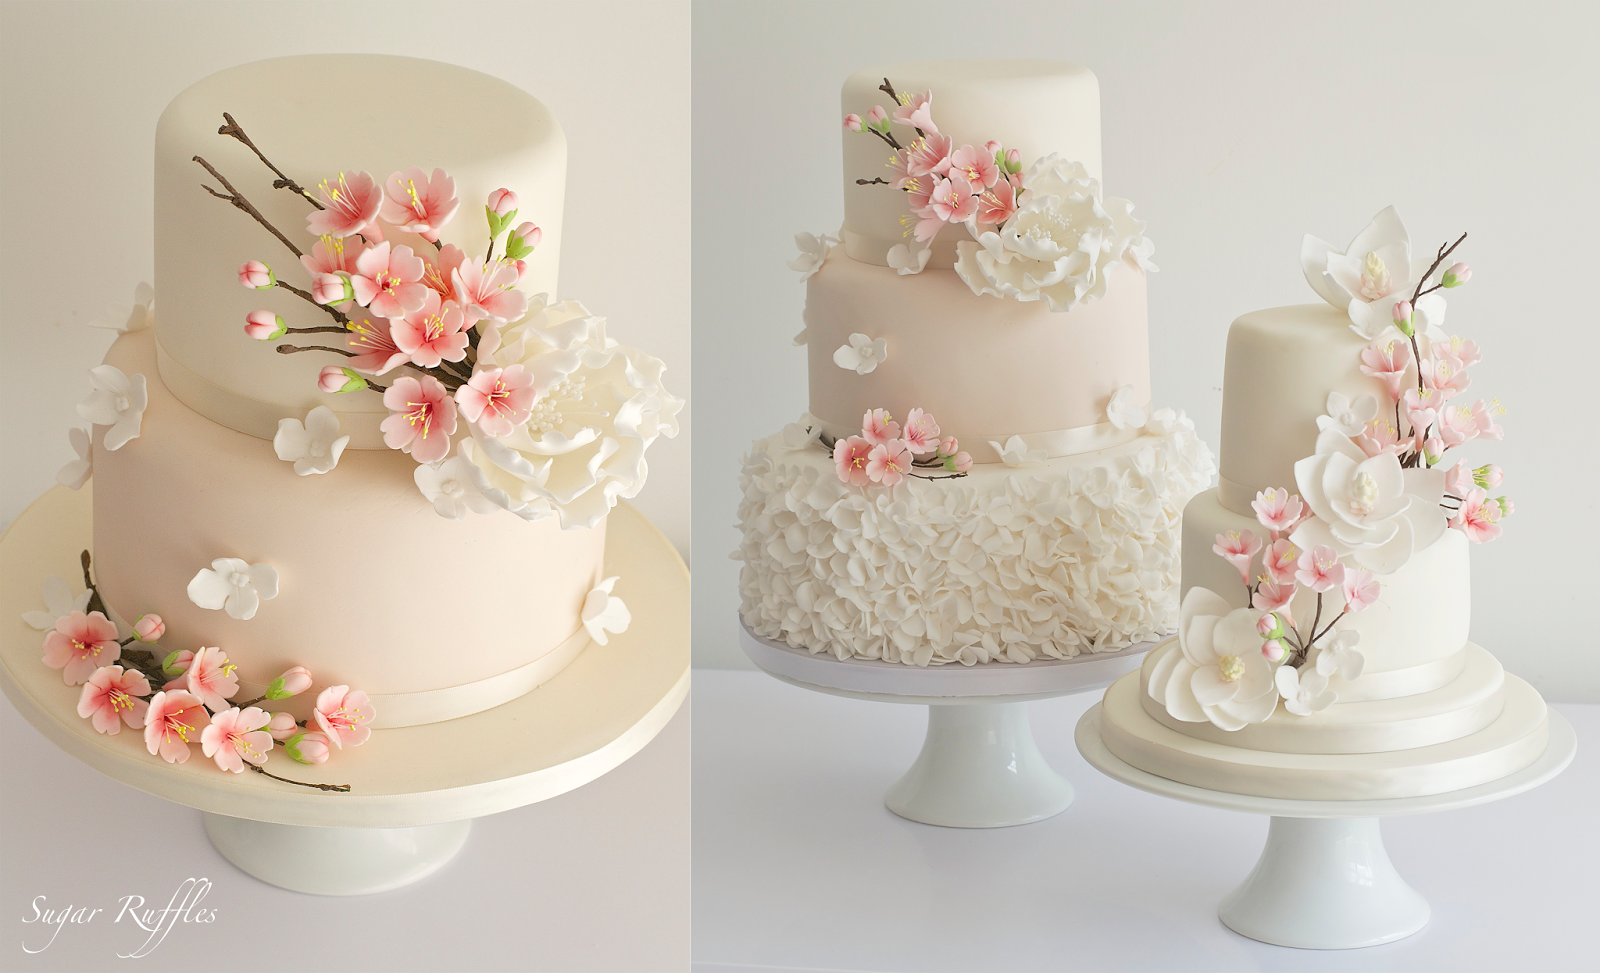 Wedding cake pictures pdf